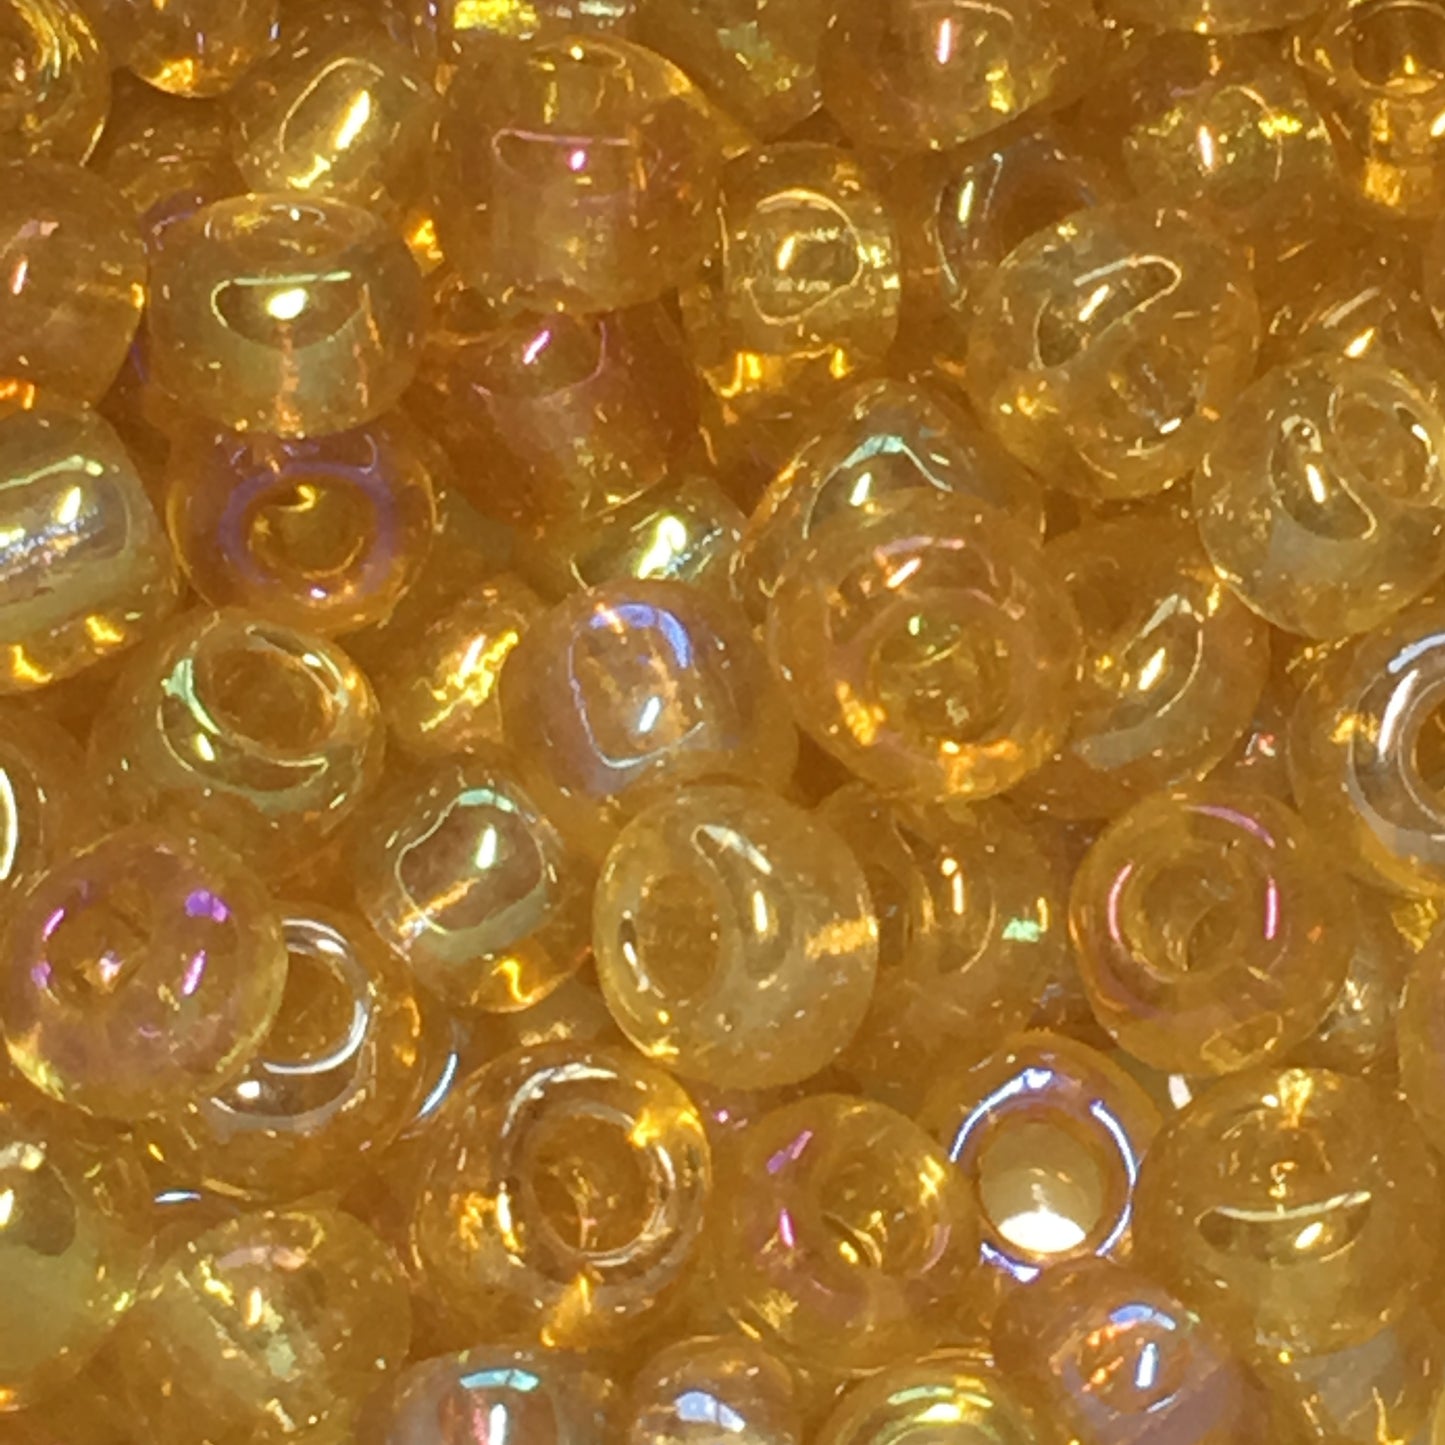 6/0 Transparent Light Topaz AB Seed Beads, 7.5 or 10 gm